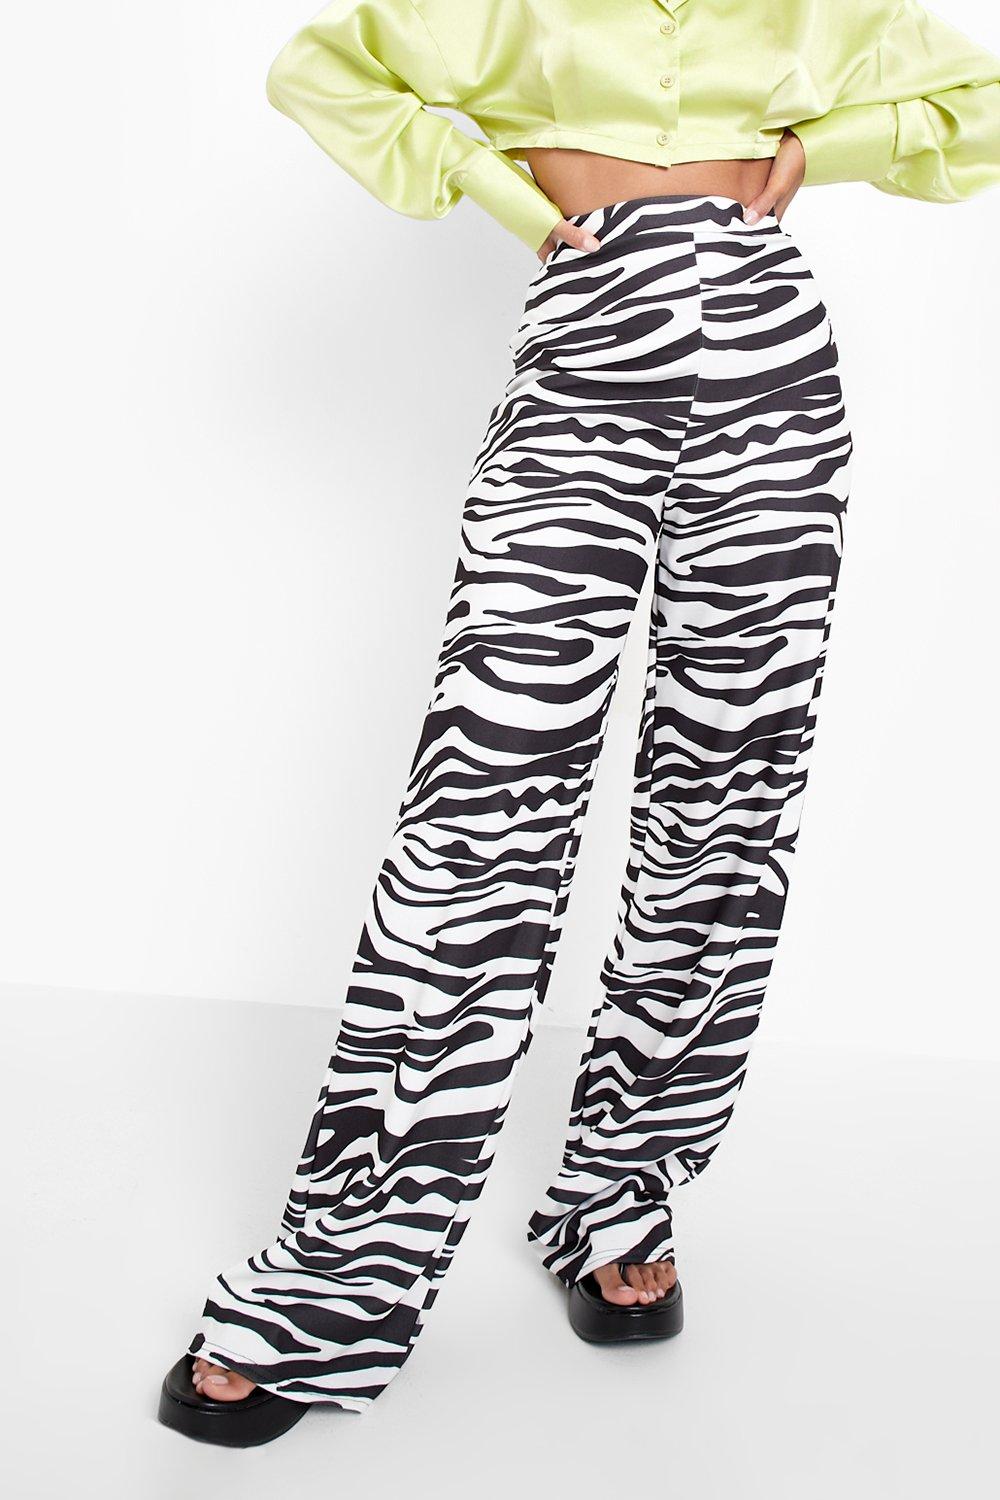 zebra print jeans womens